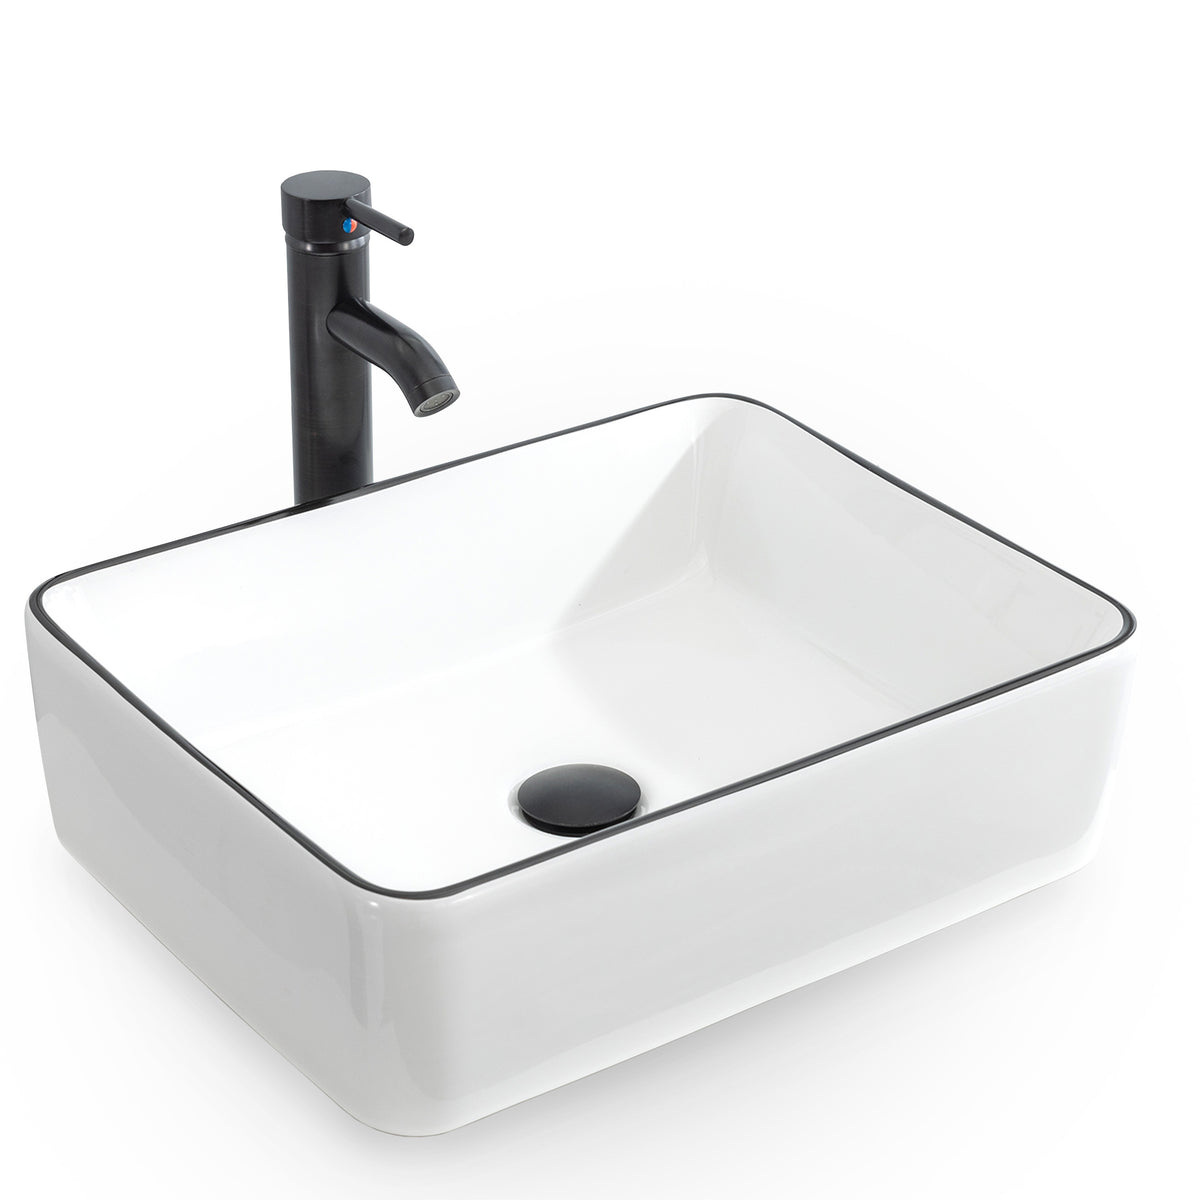 Bathroom Vessel Sink Combo Ceramic Bowl & Faucet & Pop Up Drain - White with Black Decor Line